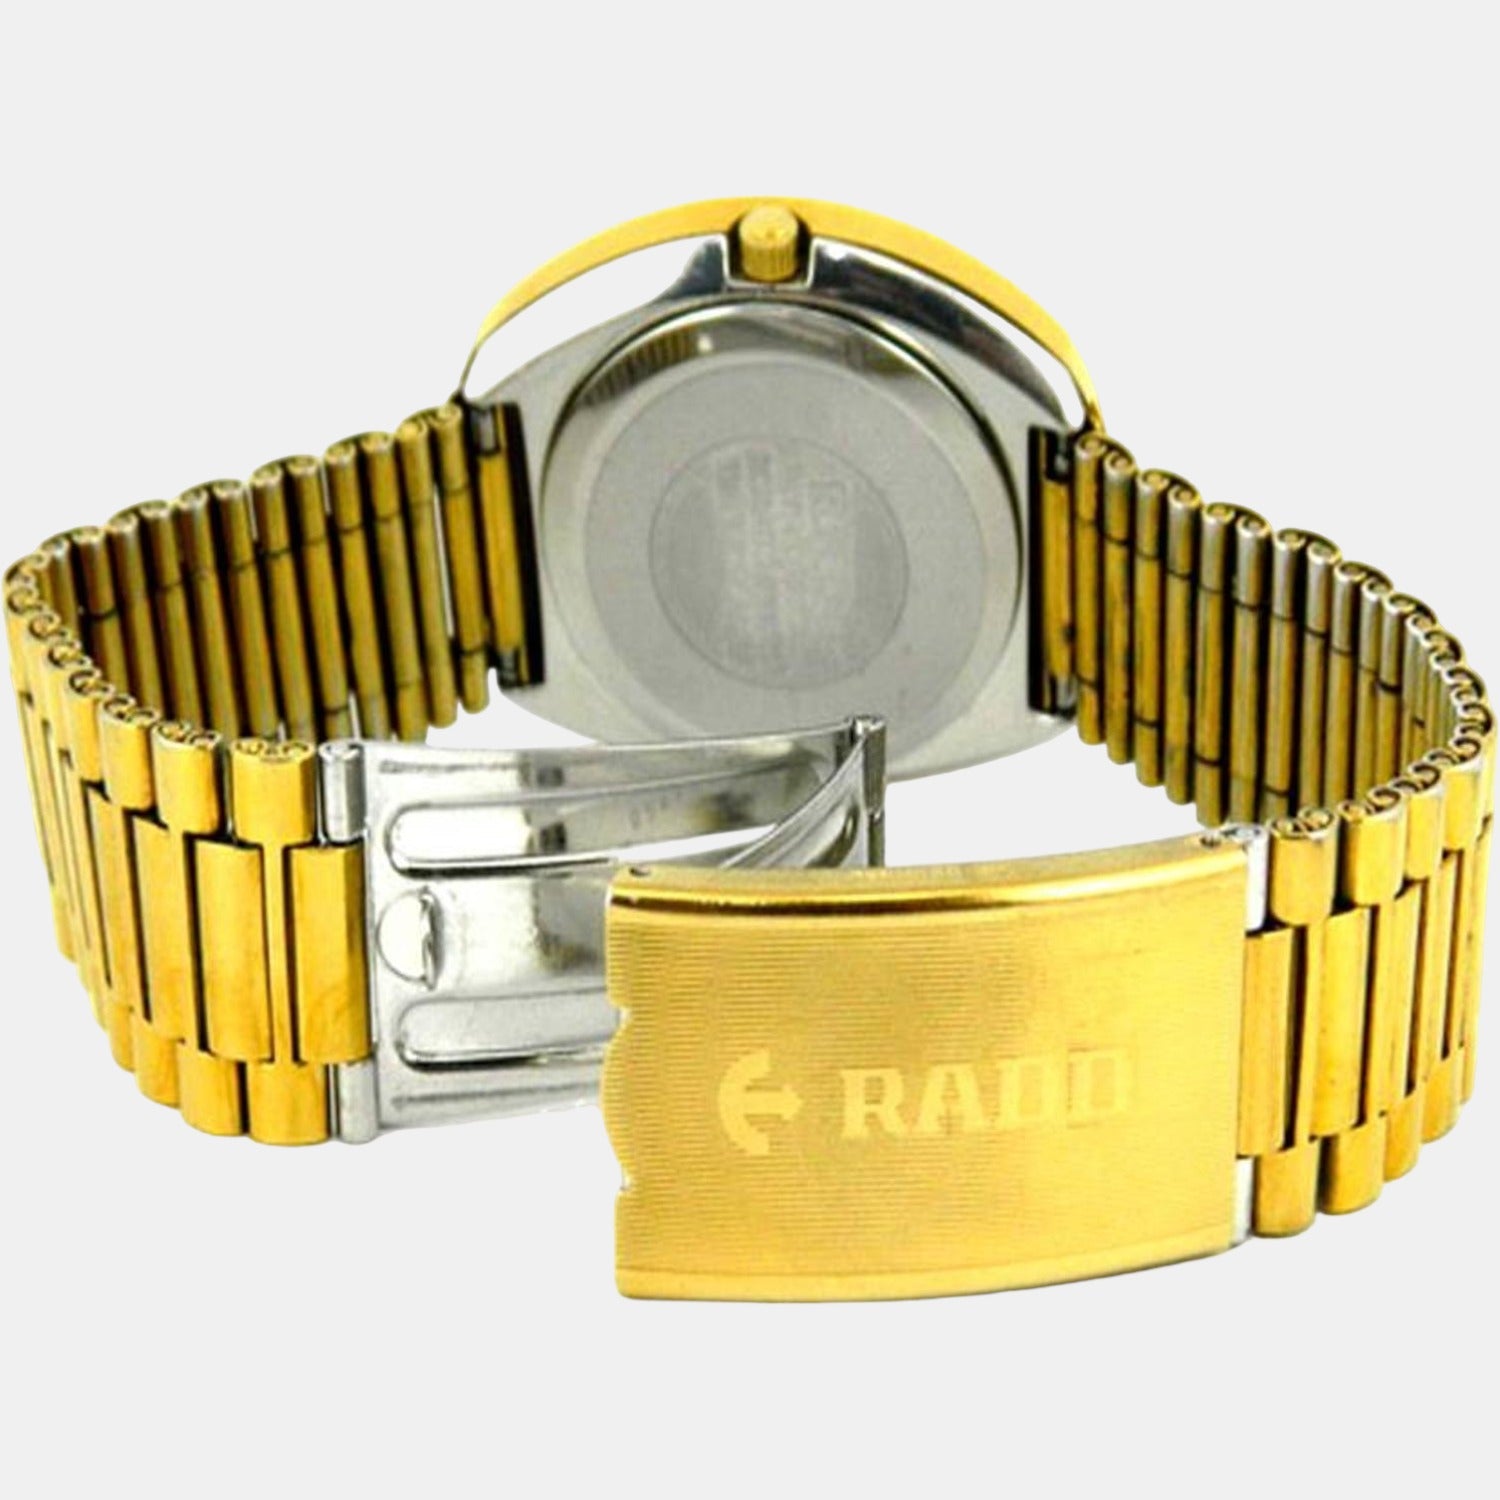 Radd Men's 7AA Premium Watch Collection